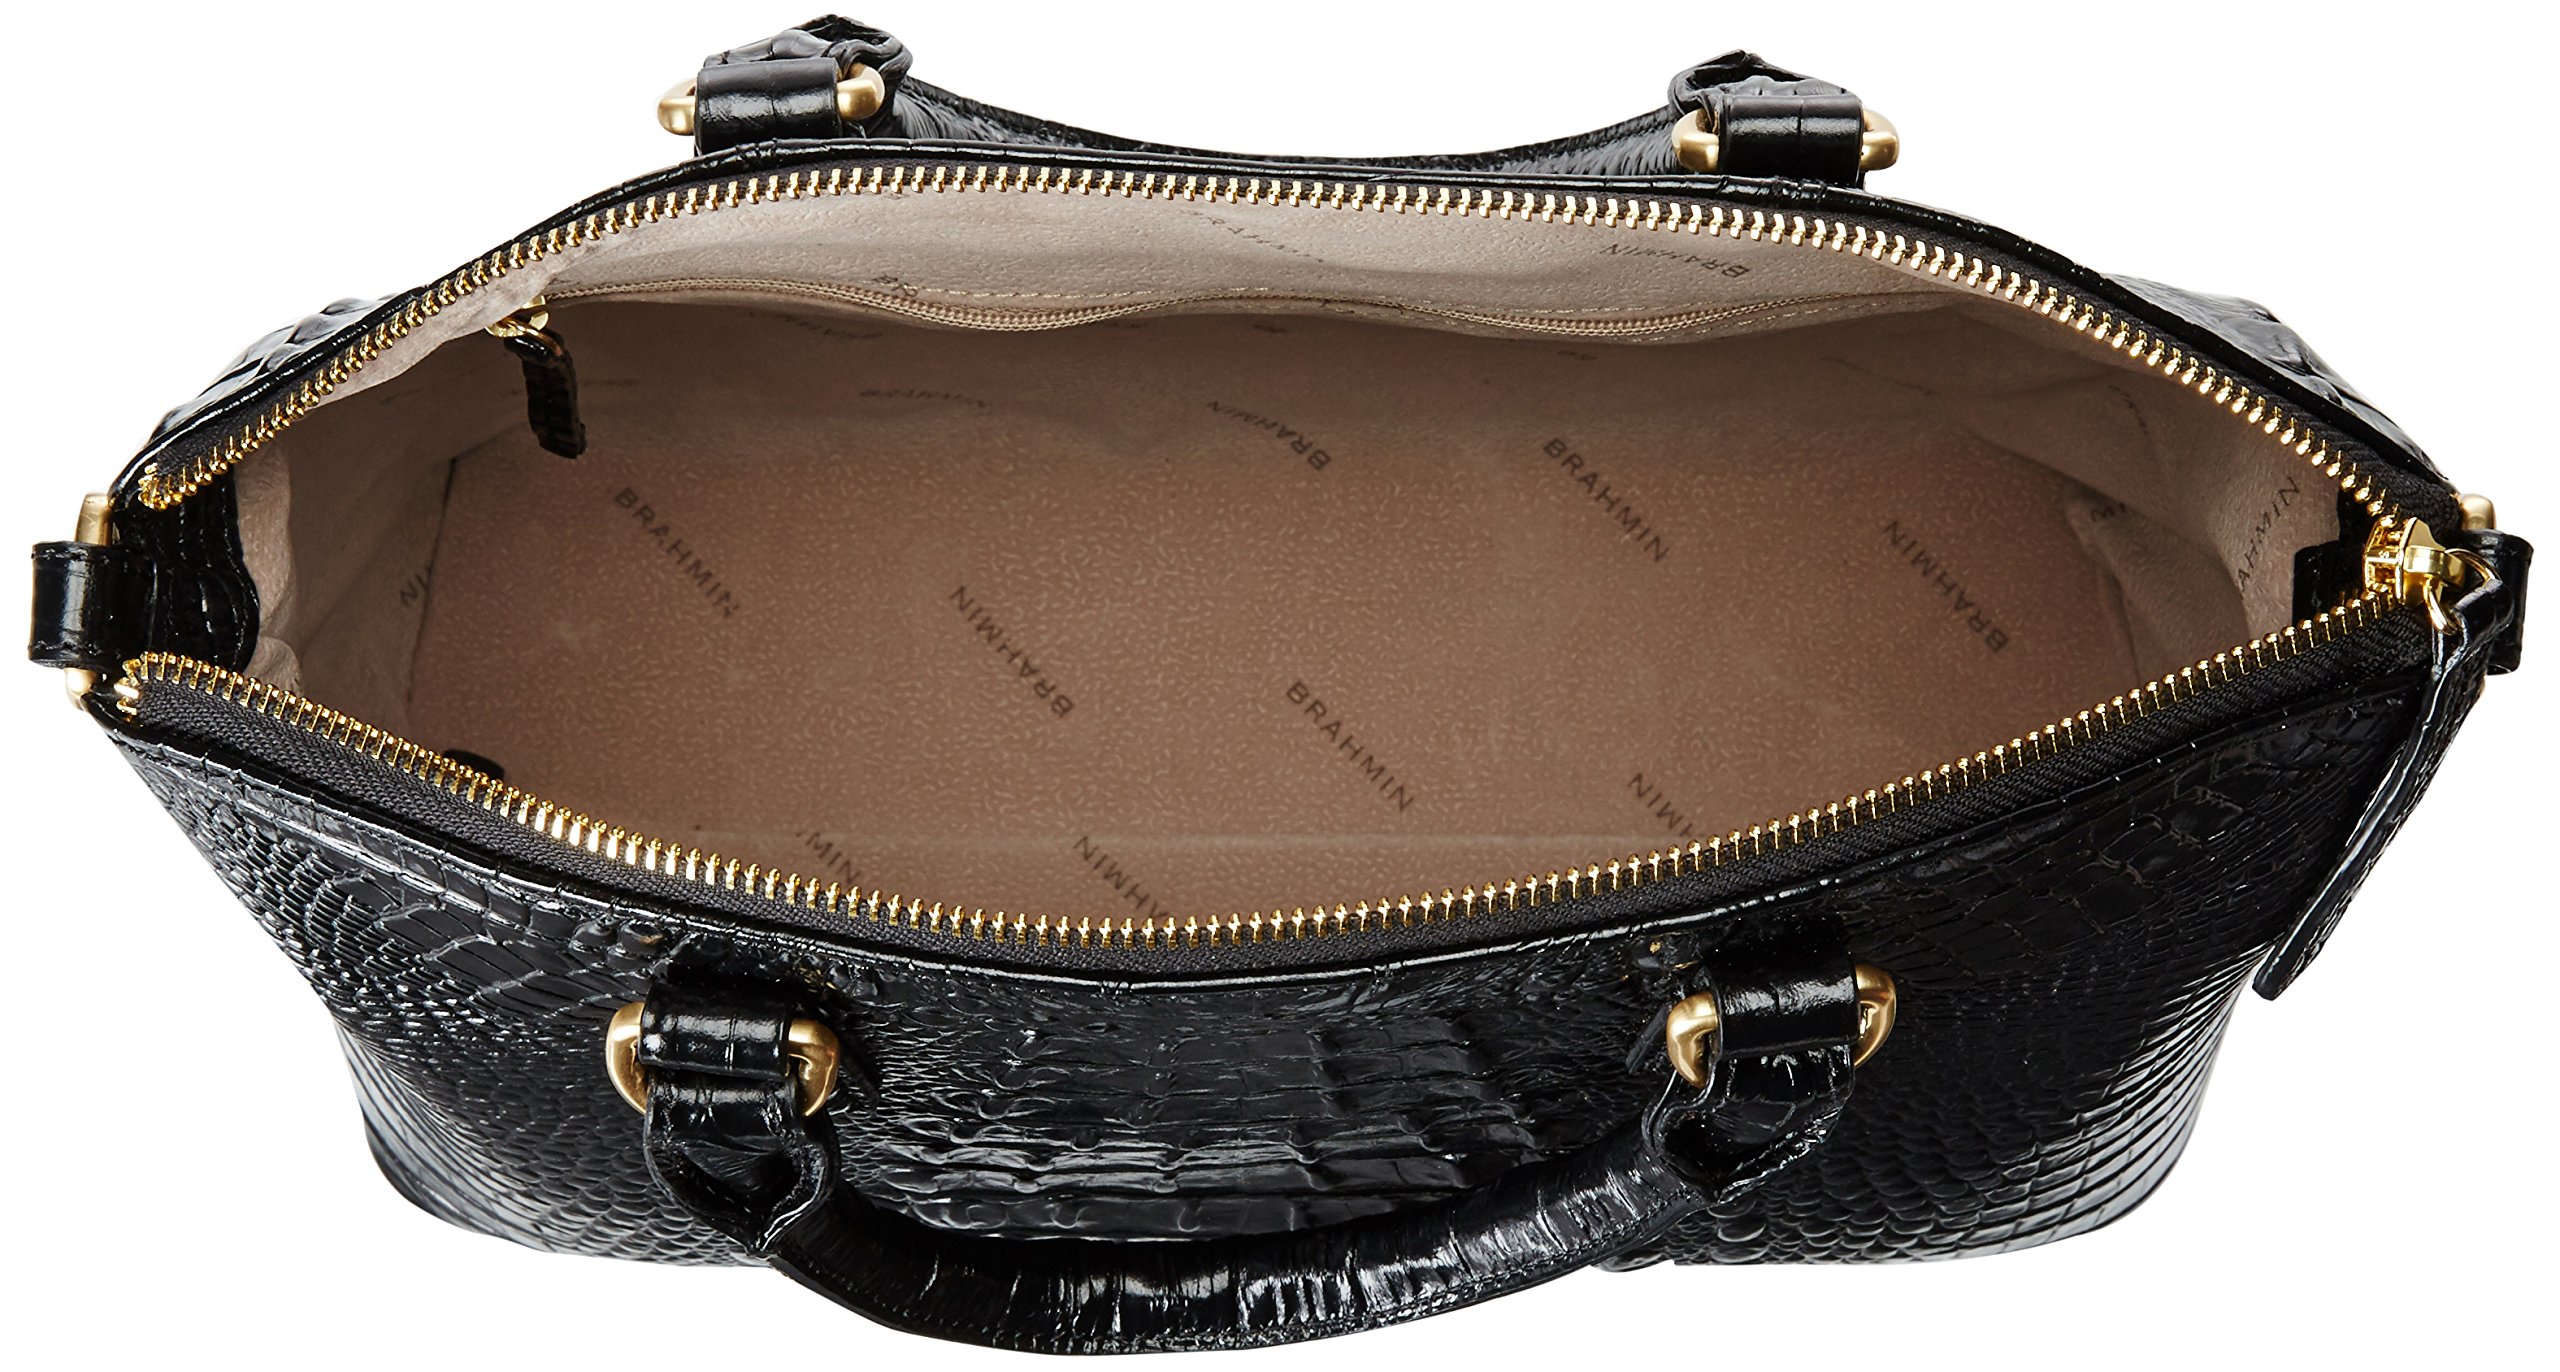 Brahmin Duxbury Satchel Convertible Top-Handle Bag